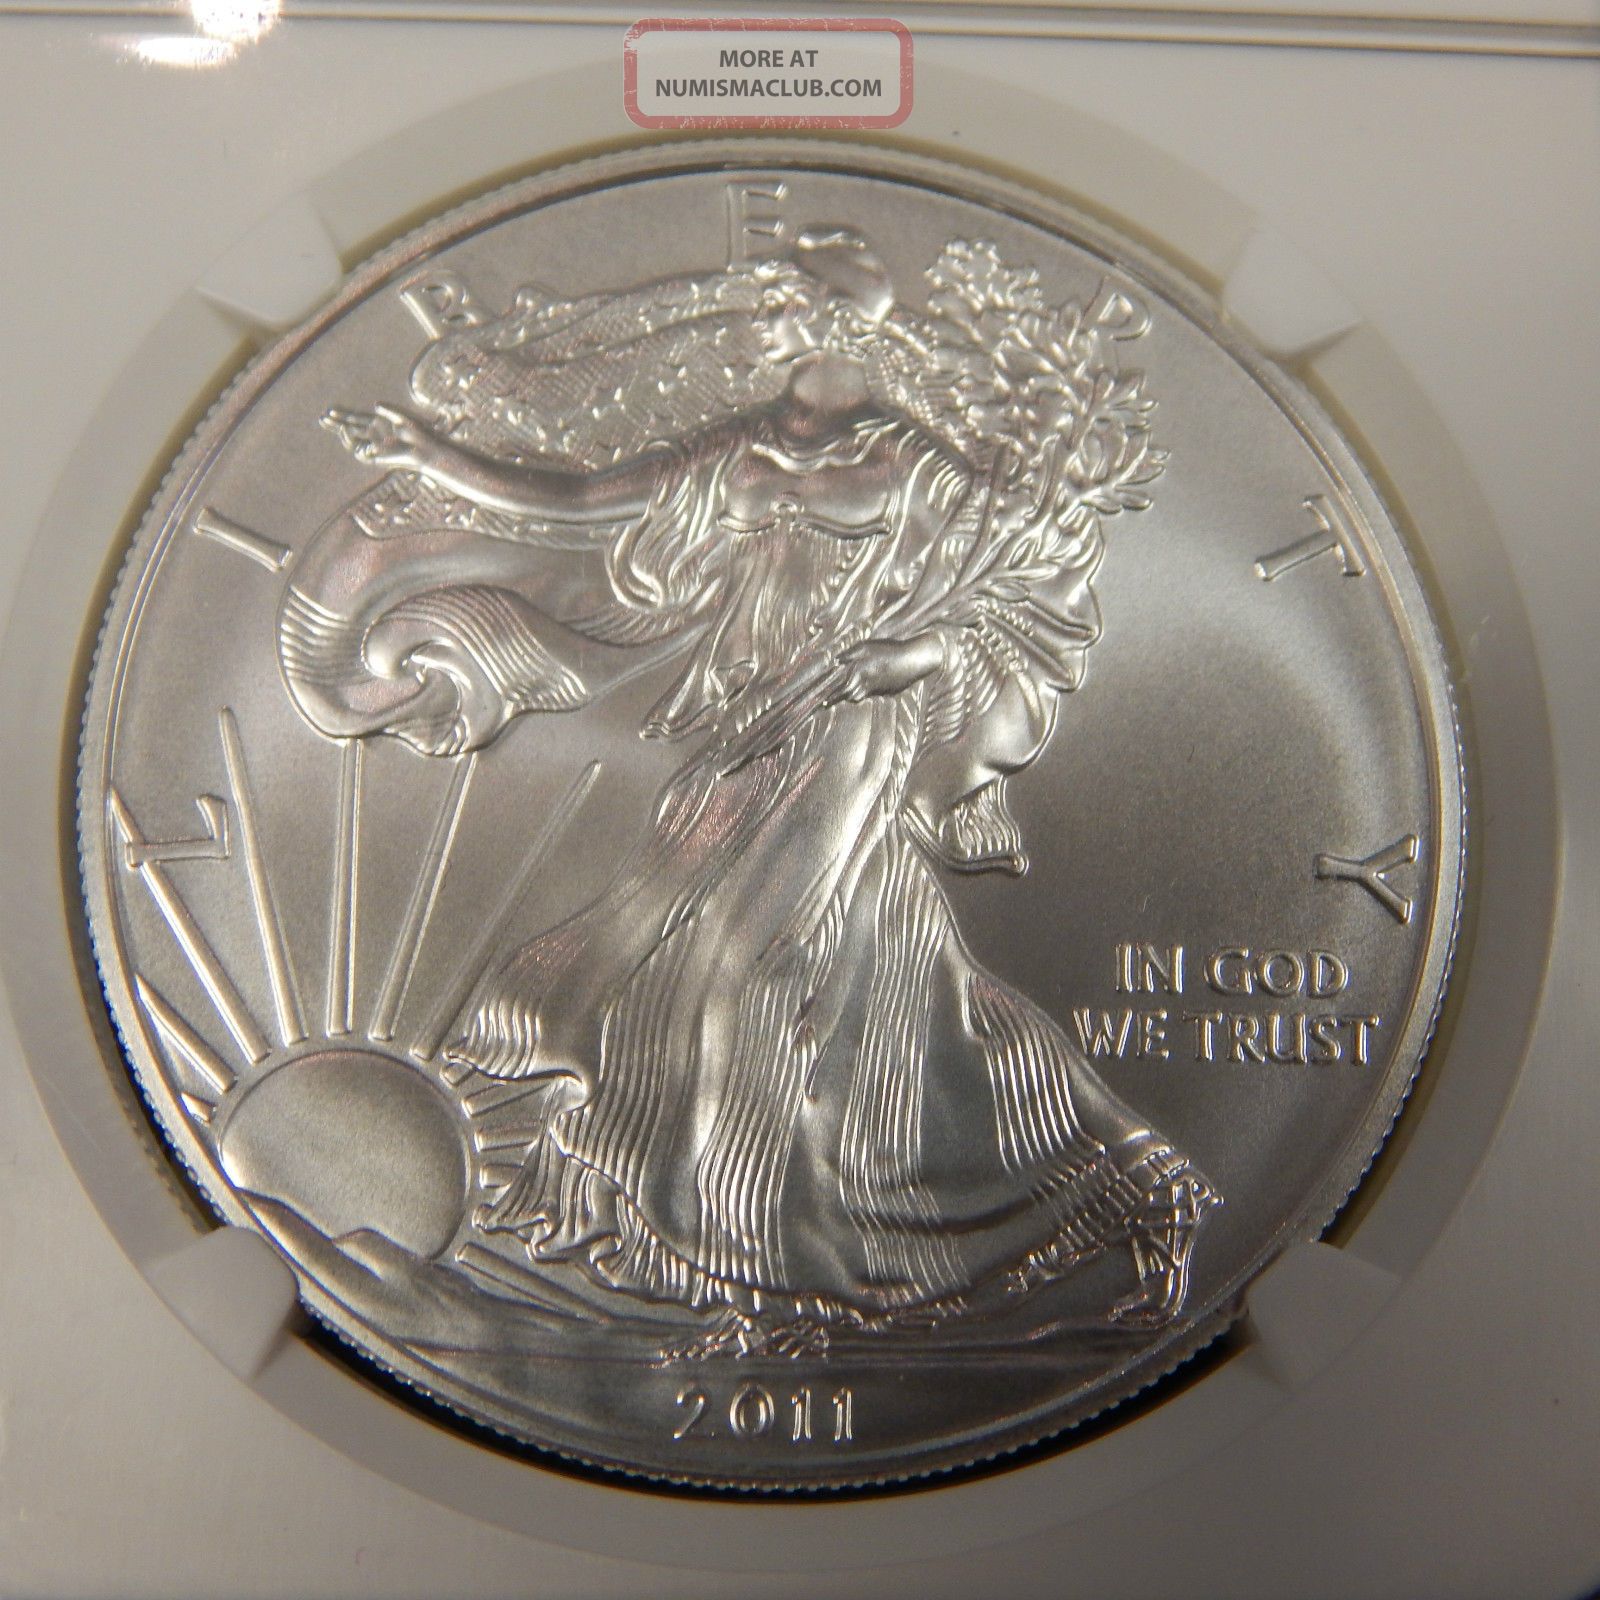 NGC MS69 2002 American Silver Eagle 1 oz .999 Fine Silver Dollar